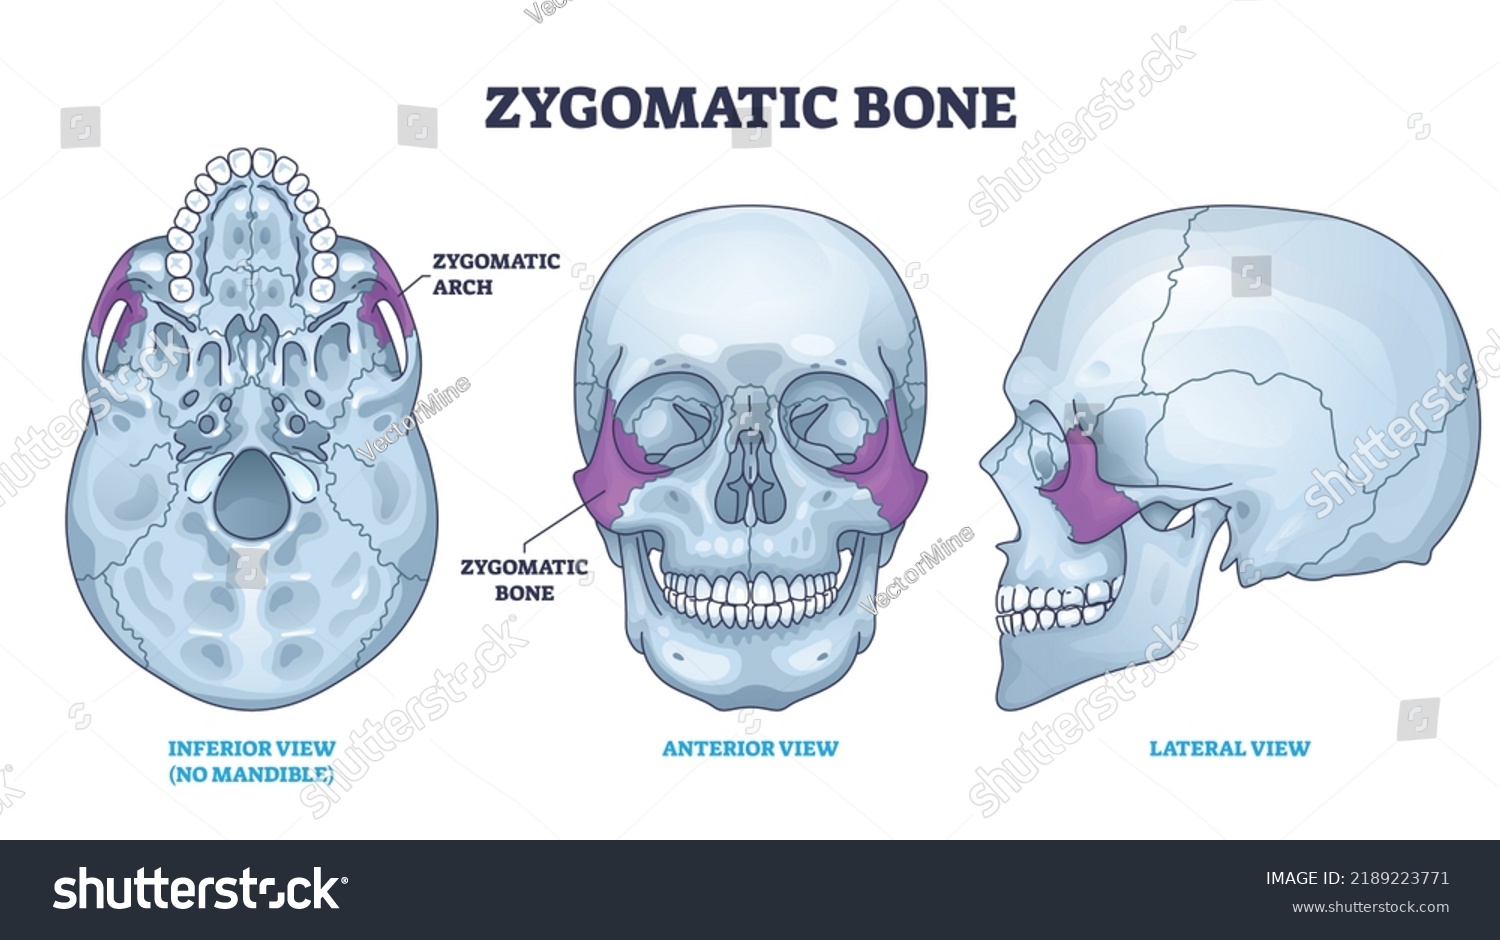 Zygomatic Bone Location Human Skull Skeleton Stock Vector Royalty Free 2189223771 Shutterstock 6267